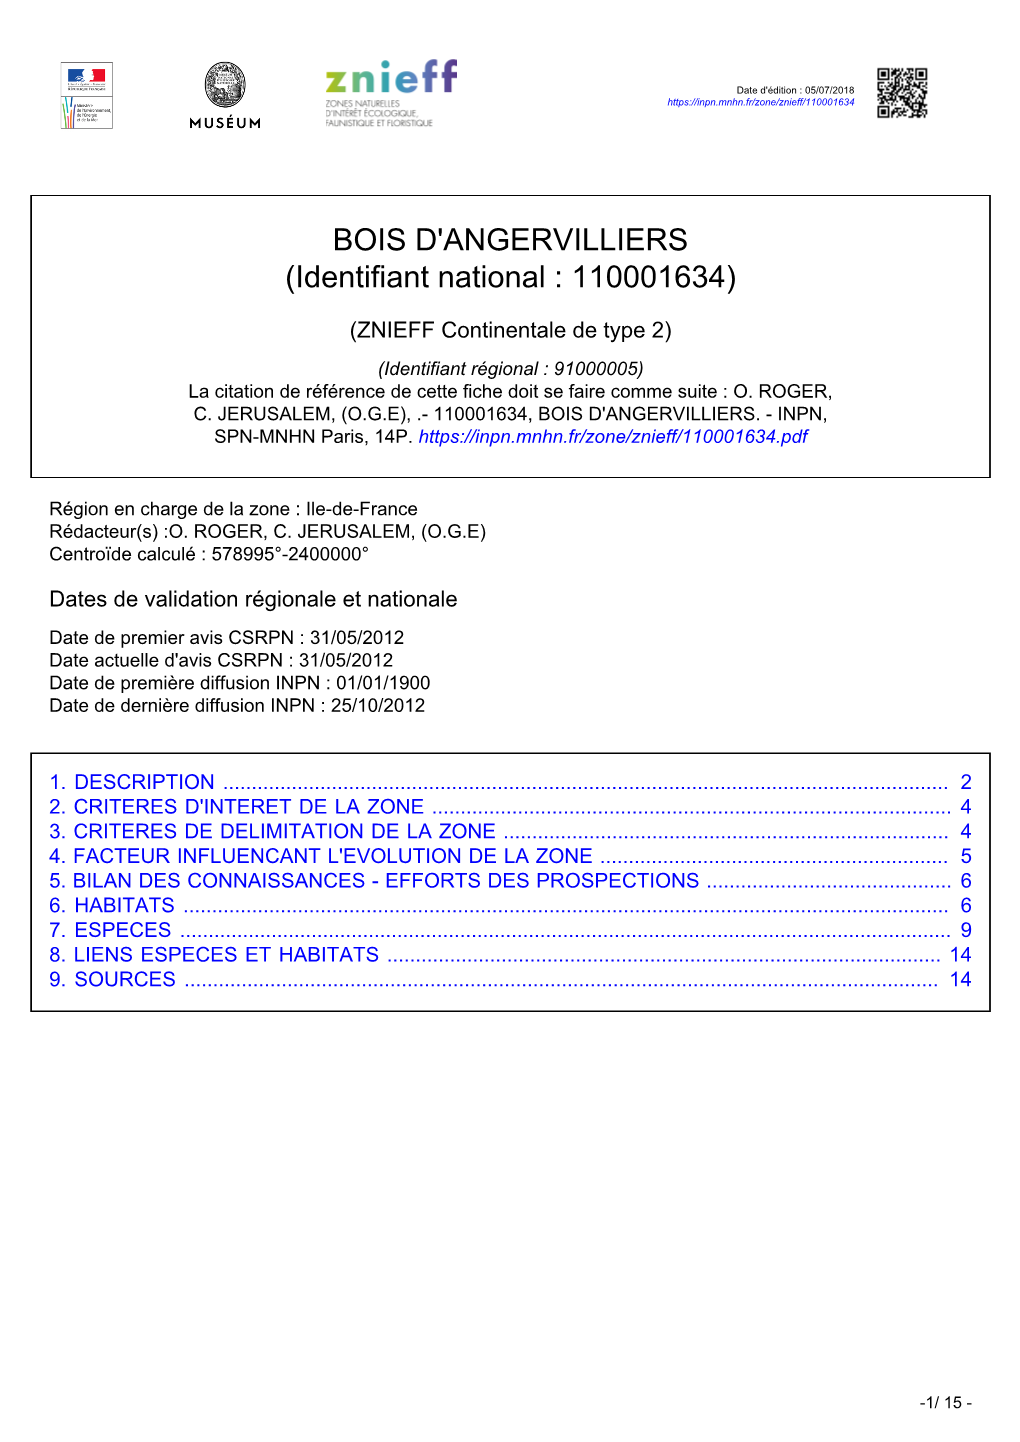 BOIS D'angervilliers (Identifiant National : 110001634)